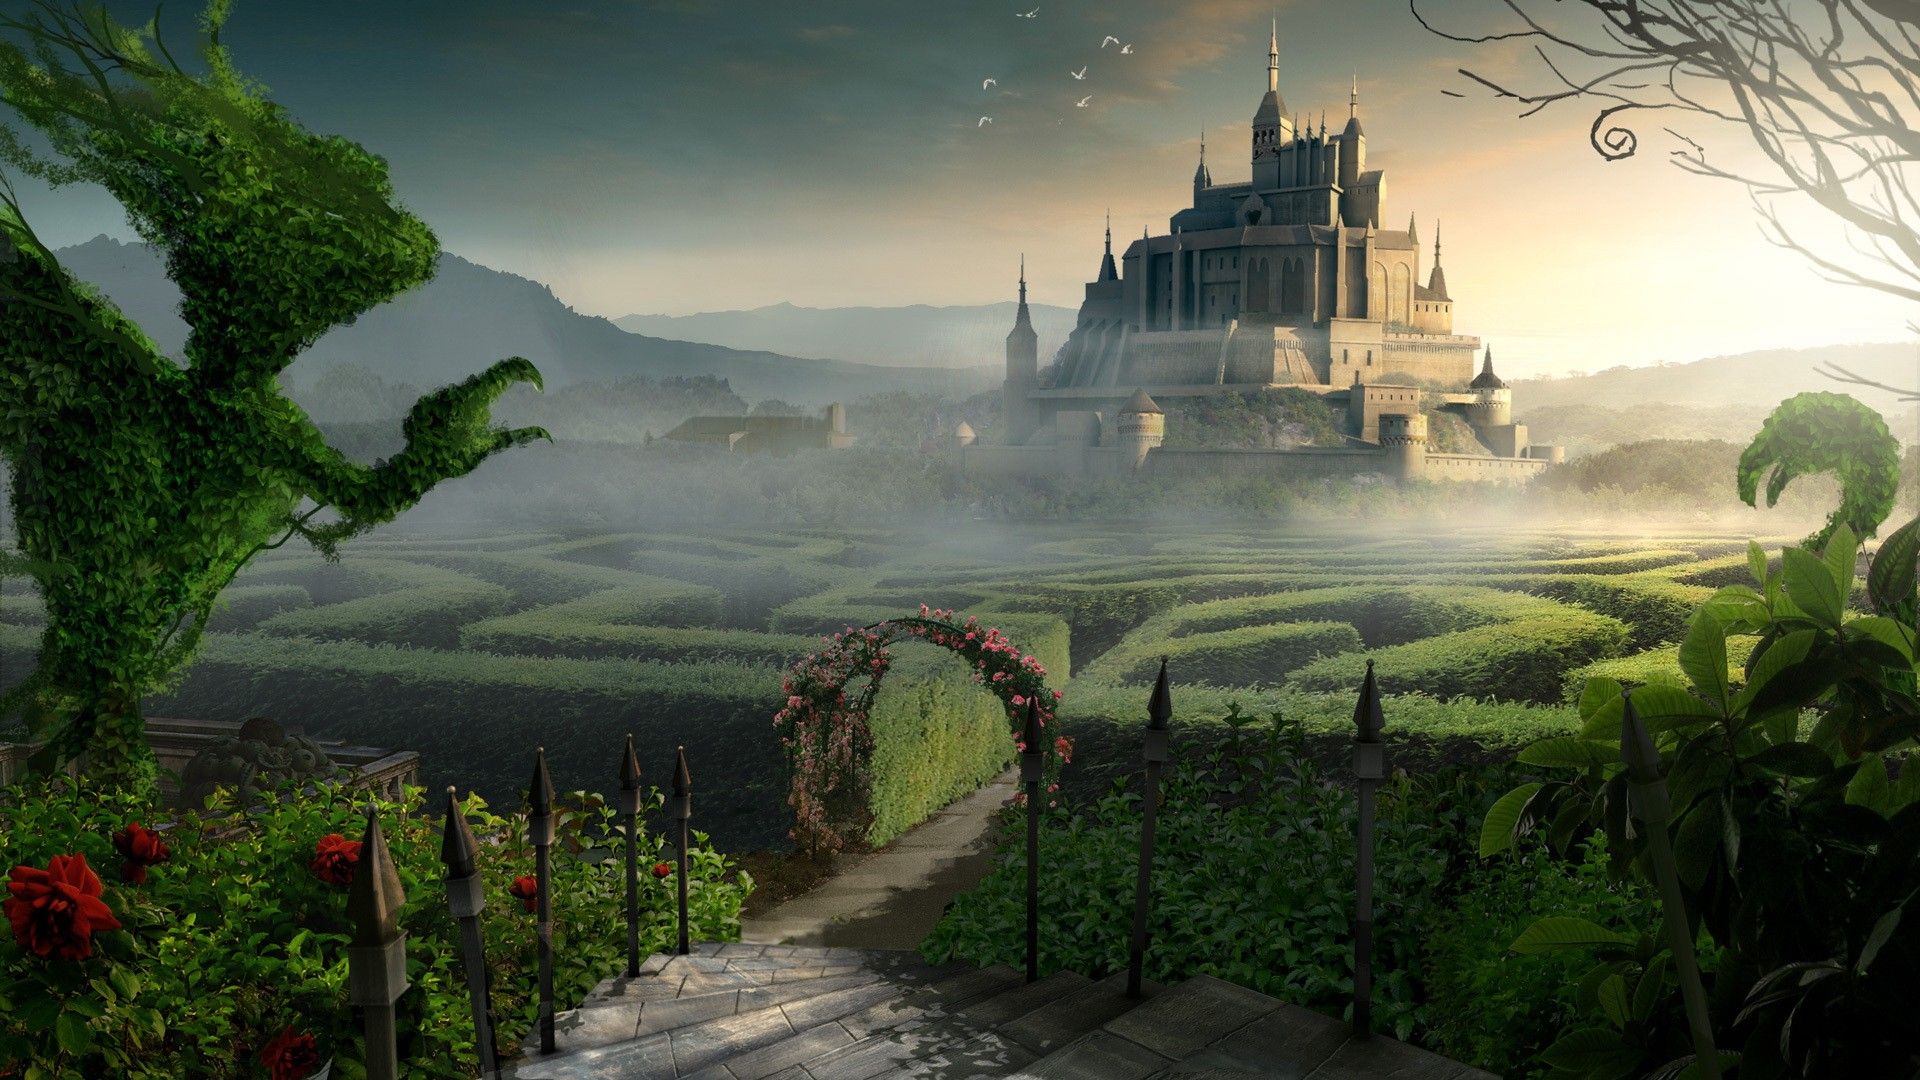 Castle Wallpaper. Castle Background. Fantasy castle, Fantasy landscape, Castle illustration